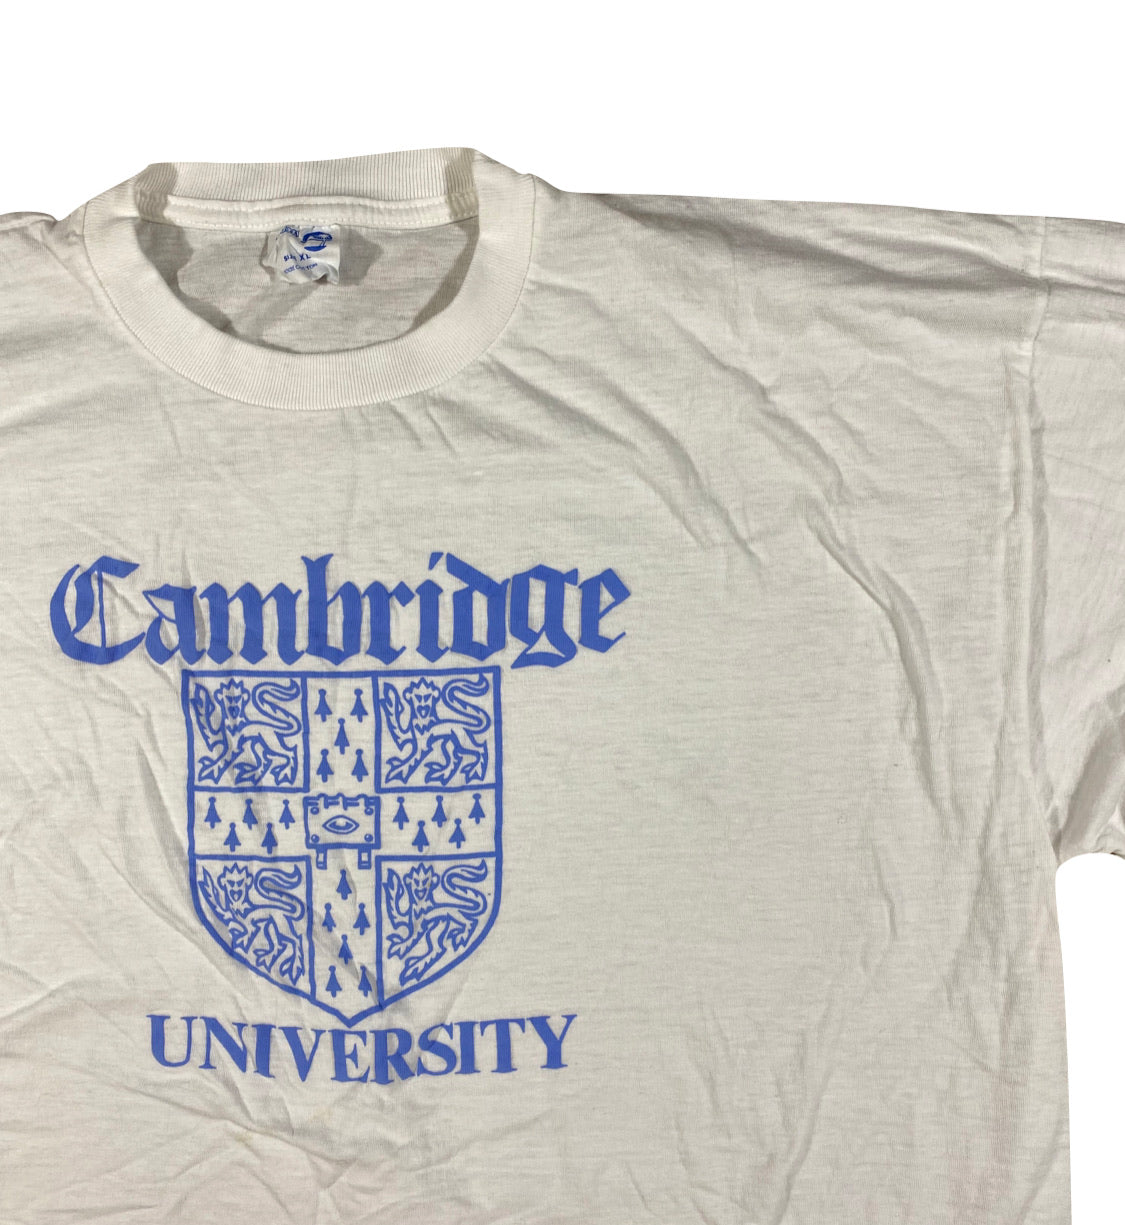 Cambridge university tee. XL